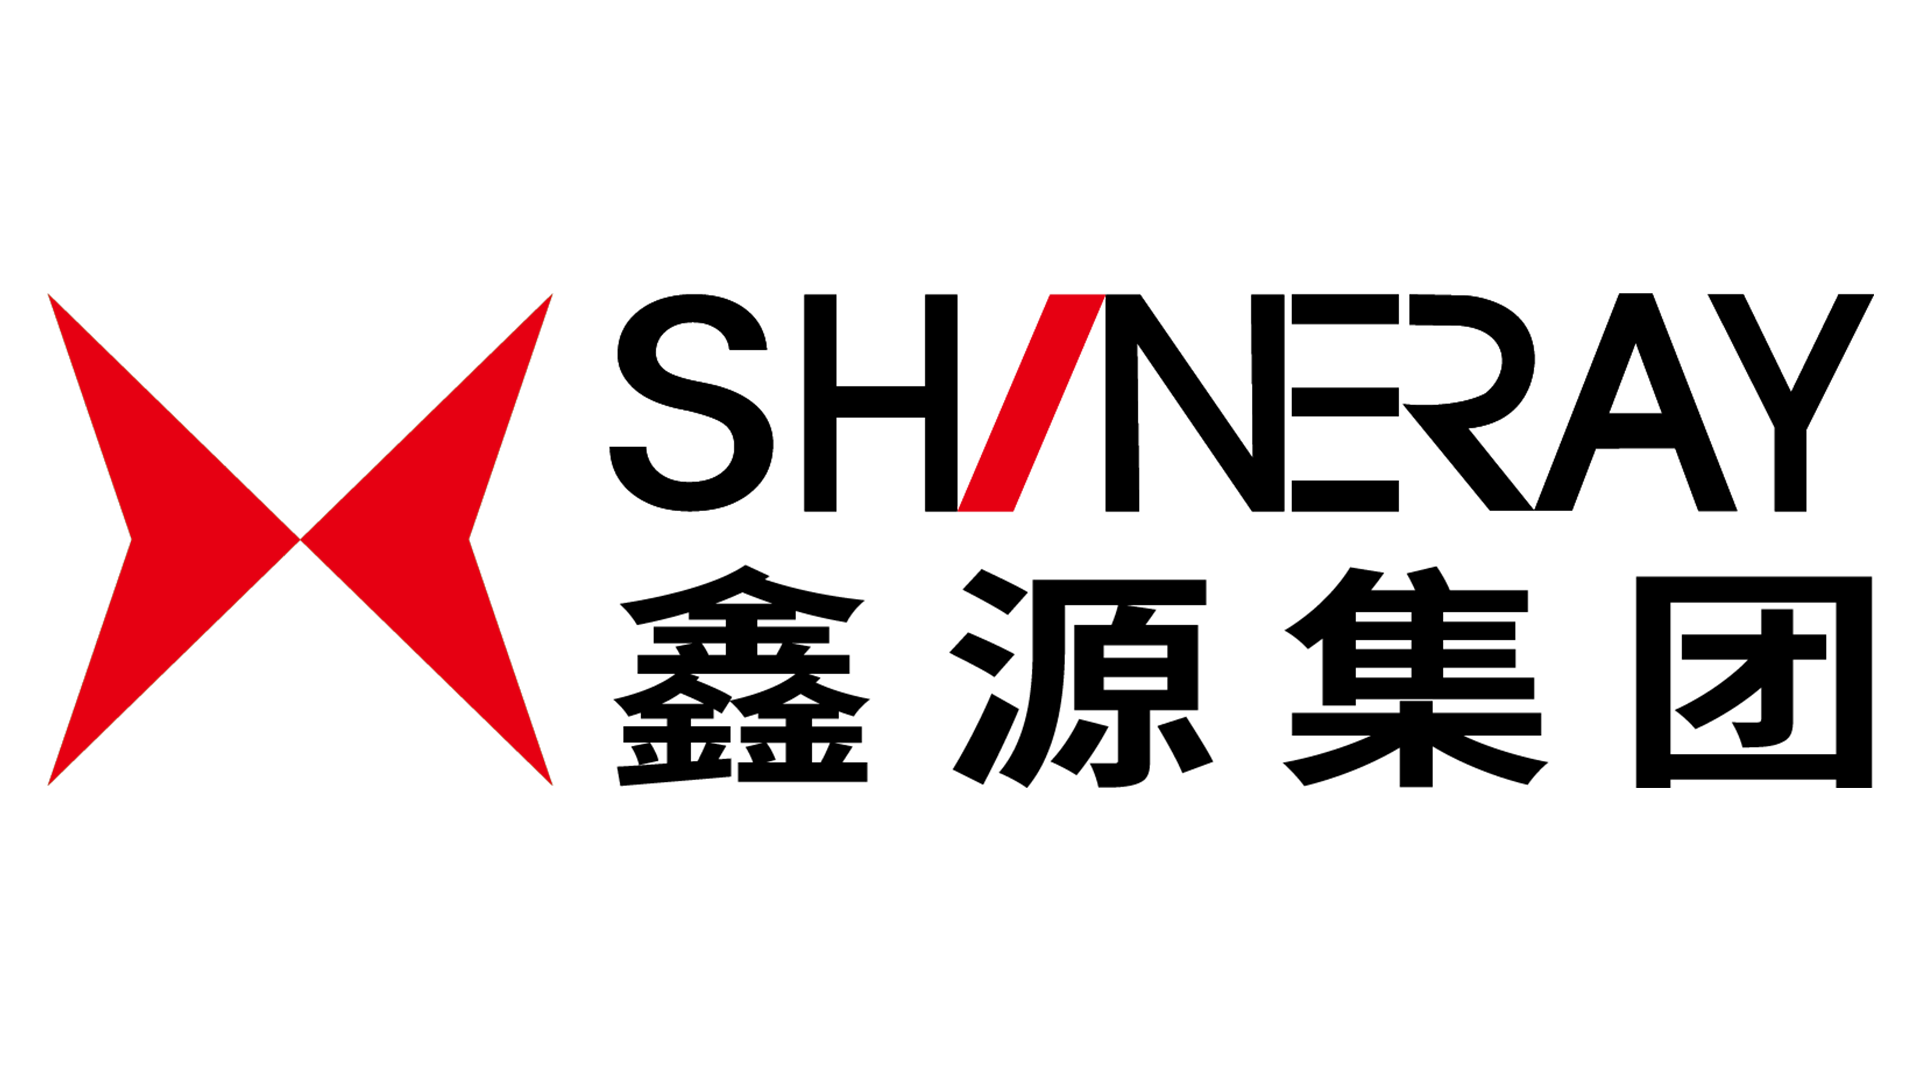 Shineray logo - Dassault Systemes